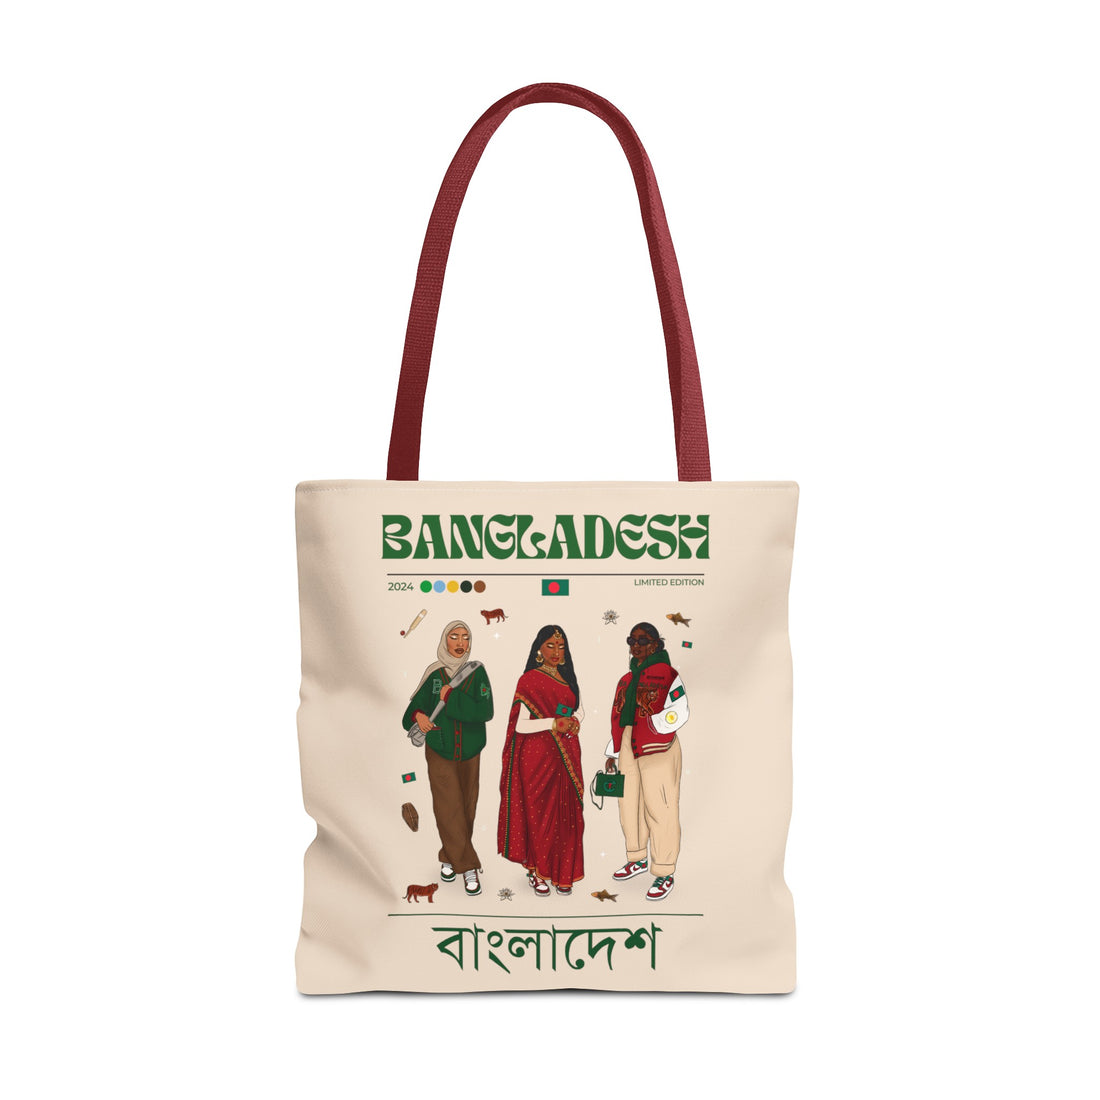 Bangladesh x Streetwear Tote Bag